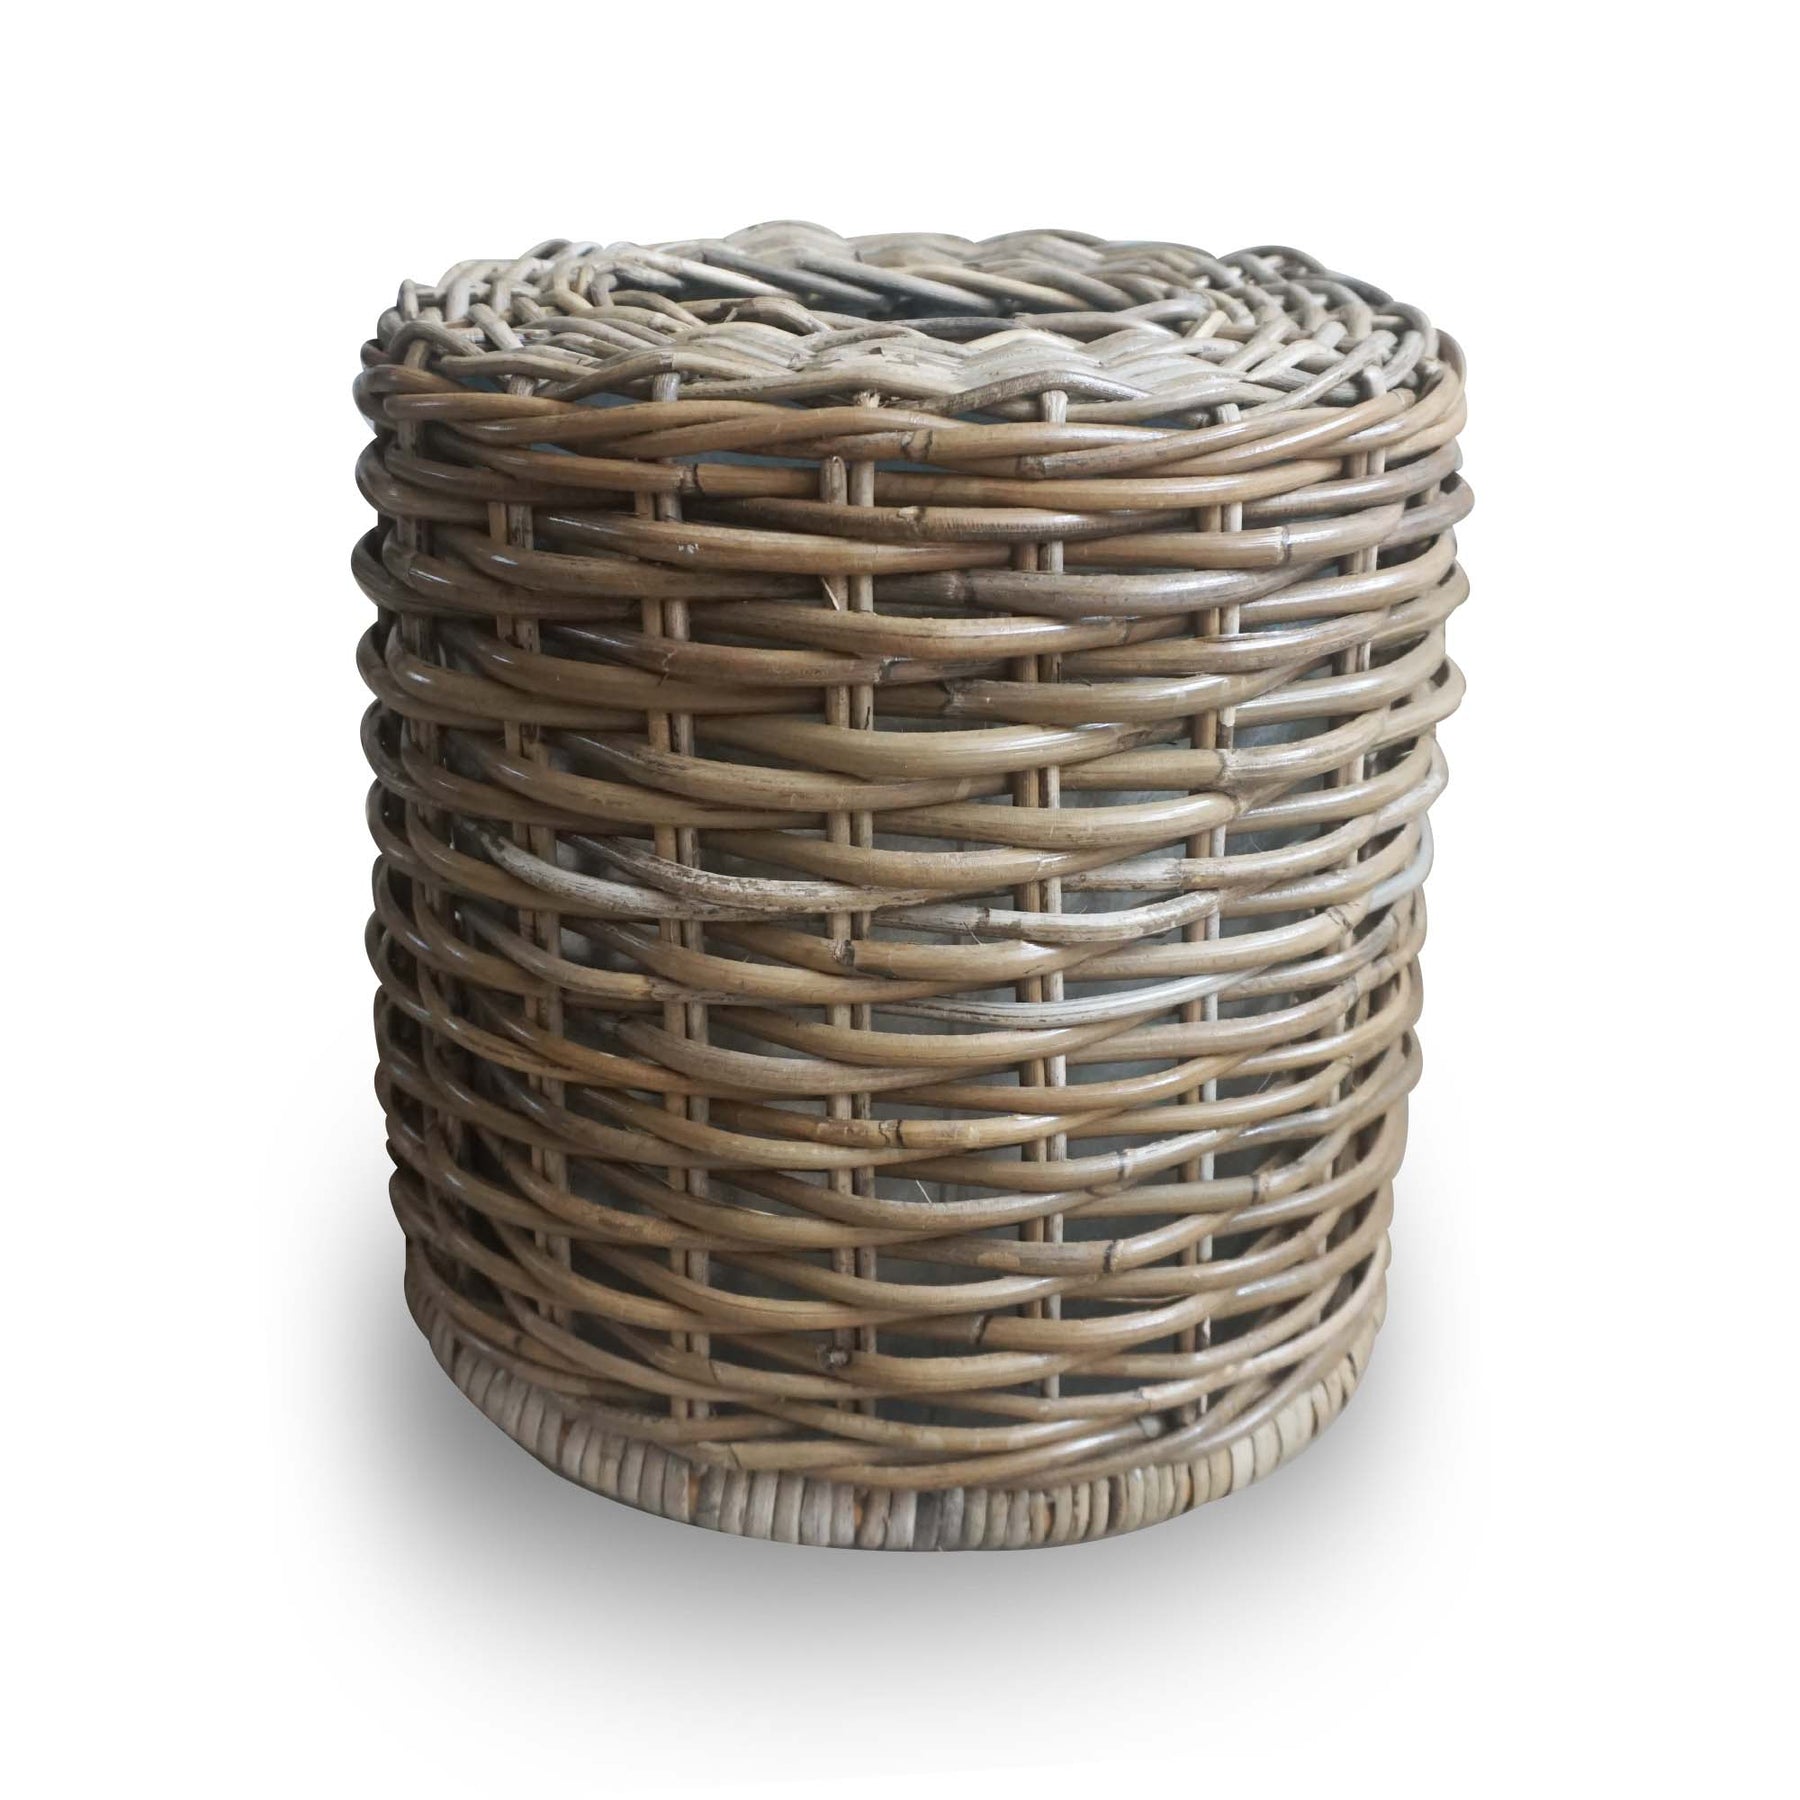 Drop-In Rectangular Wicker Waste Basket with Metal Liner – The Basket Lady